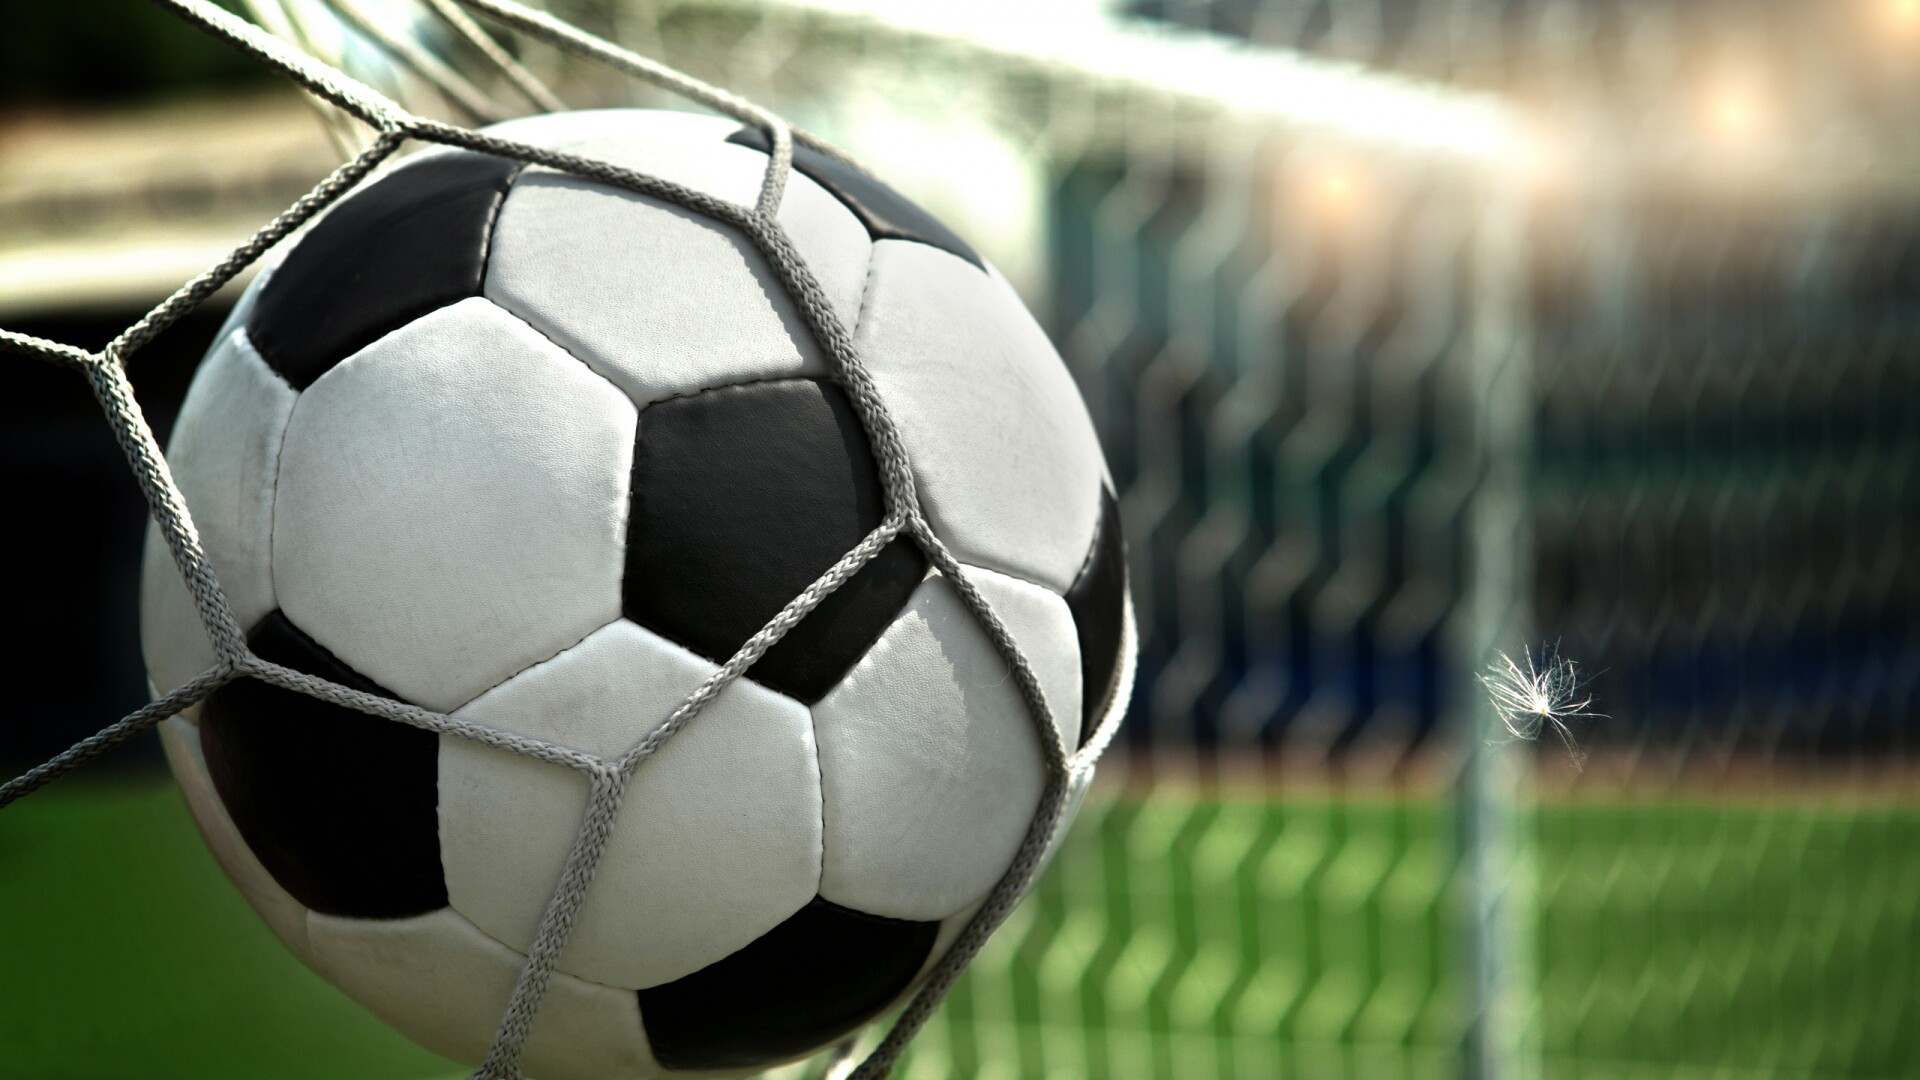 Goal (Sports): The ball's classic construction, 32 panels, Football, Sports gear, Ball game. 1920x1080 Full HD Wallpaper.